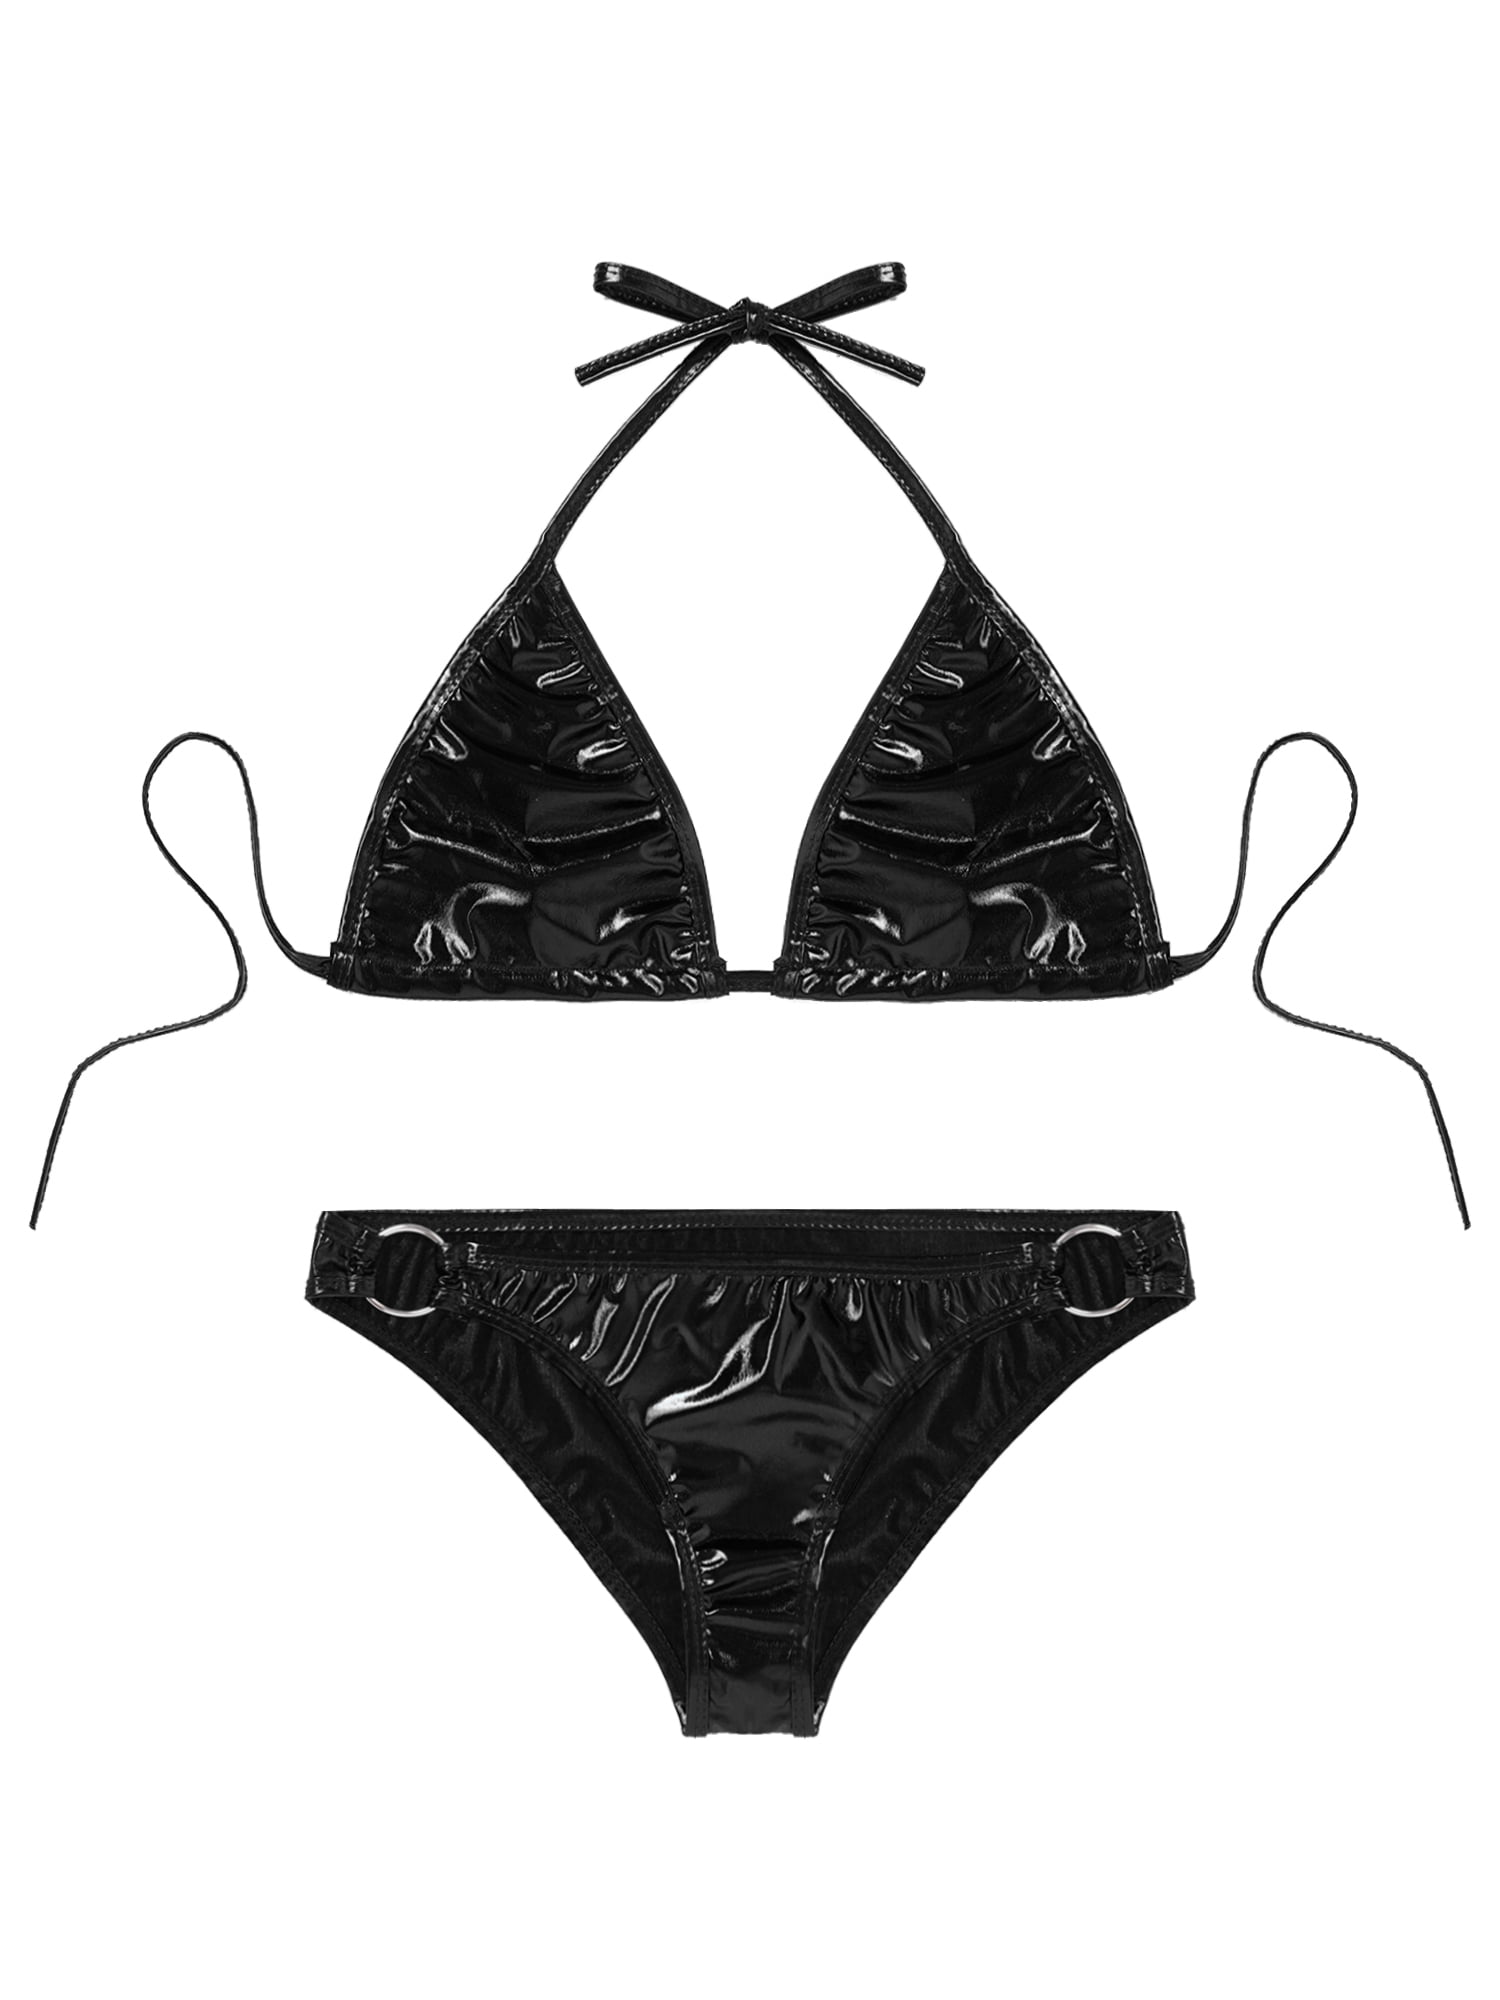 Beachwear Bikini Shiny Metallic O-ring with Bikini Briefs Set Bathing Womens Suit Bra YEAHDOR